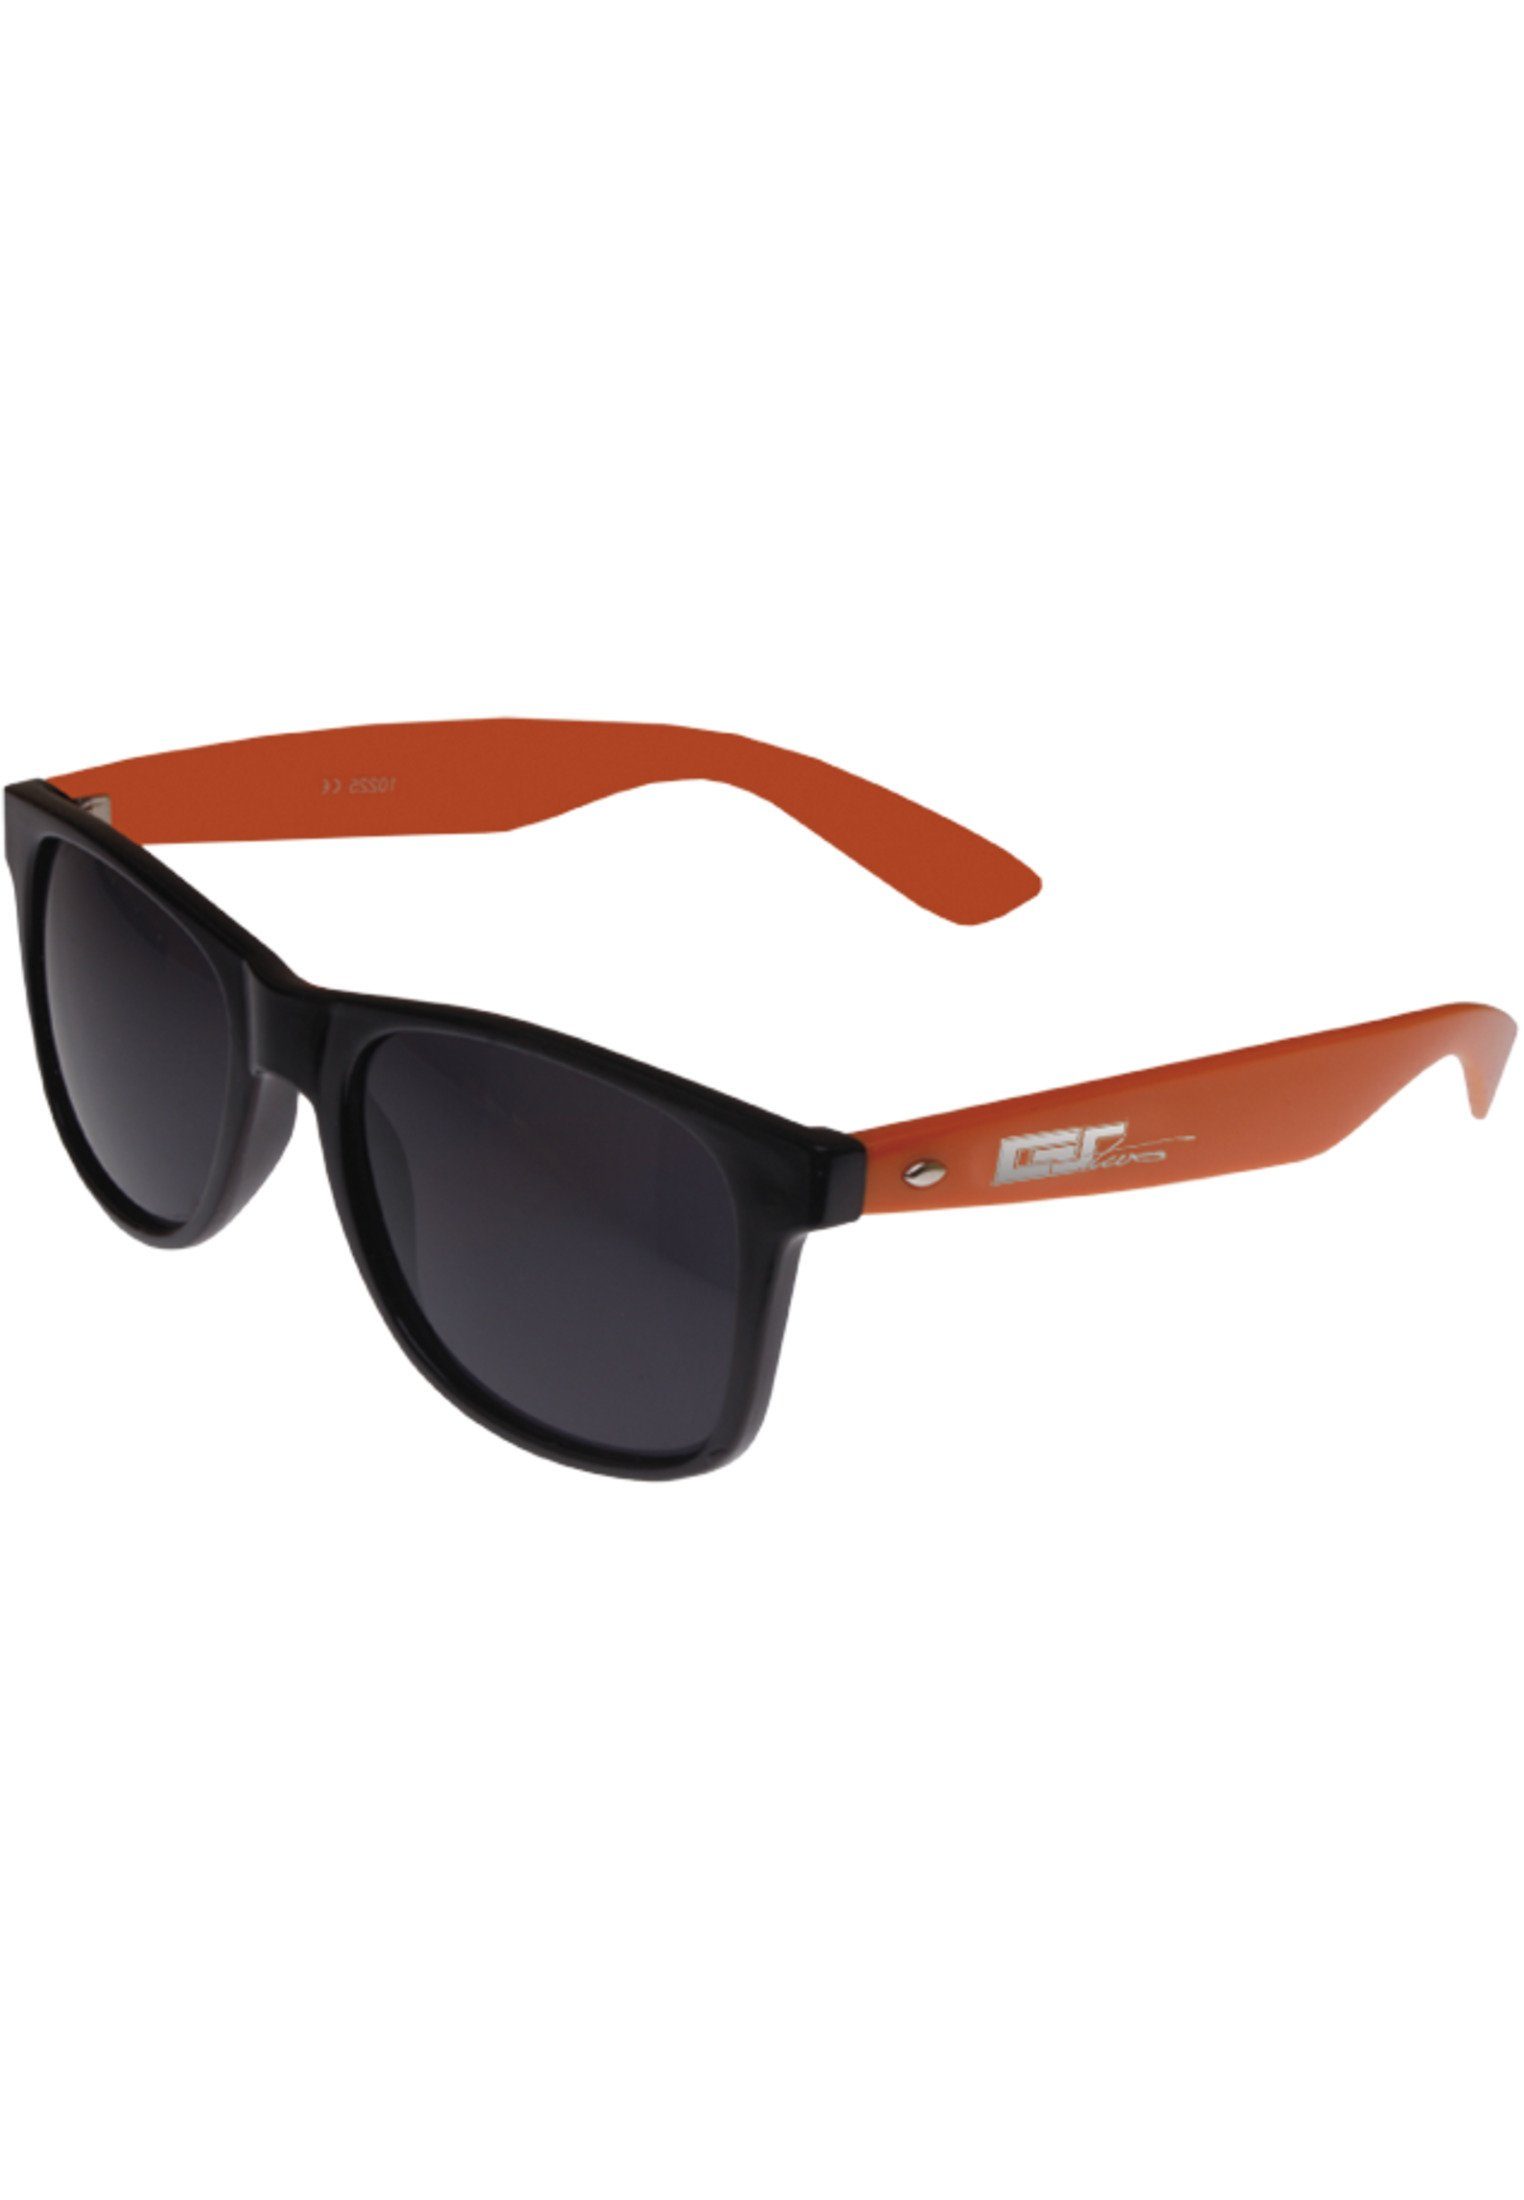 Groove Shades Accessoires MSTRDS GStwo black/orange Sonnenbrille